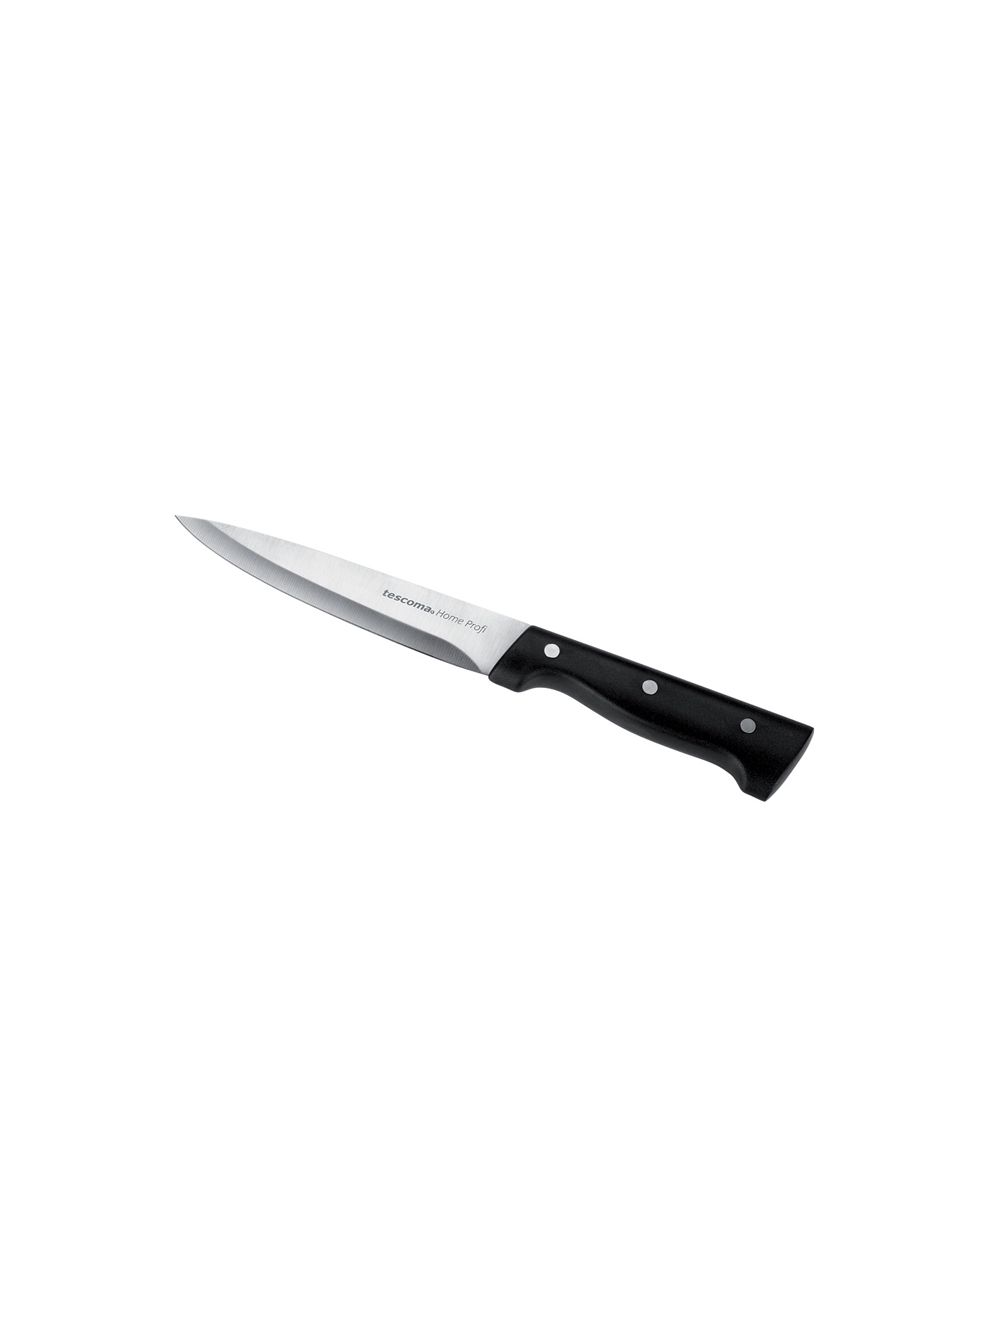 Tescoma 9 cm Utility Knife